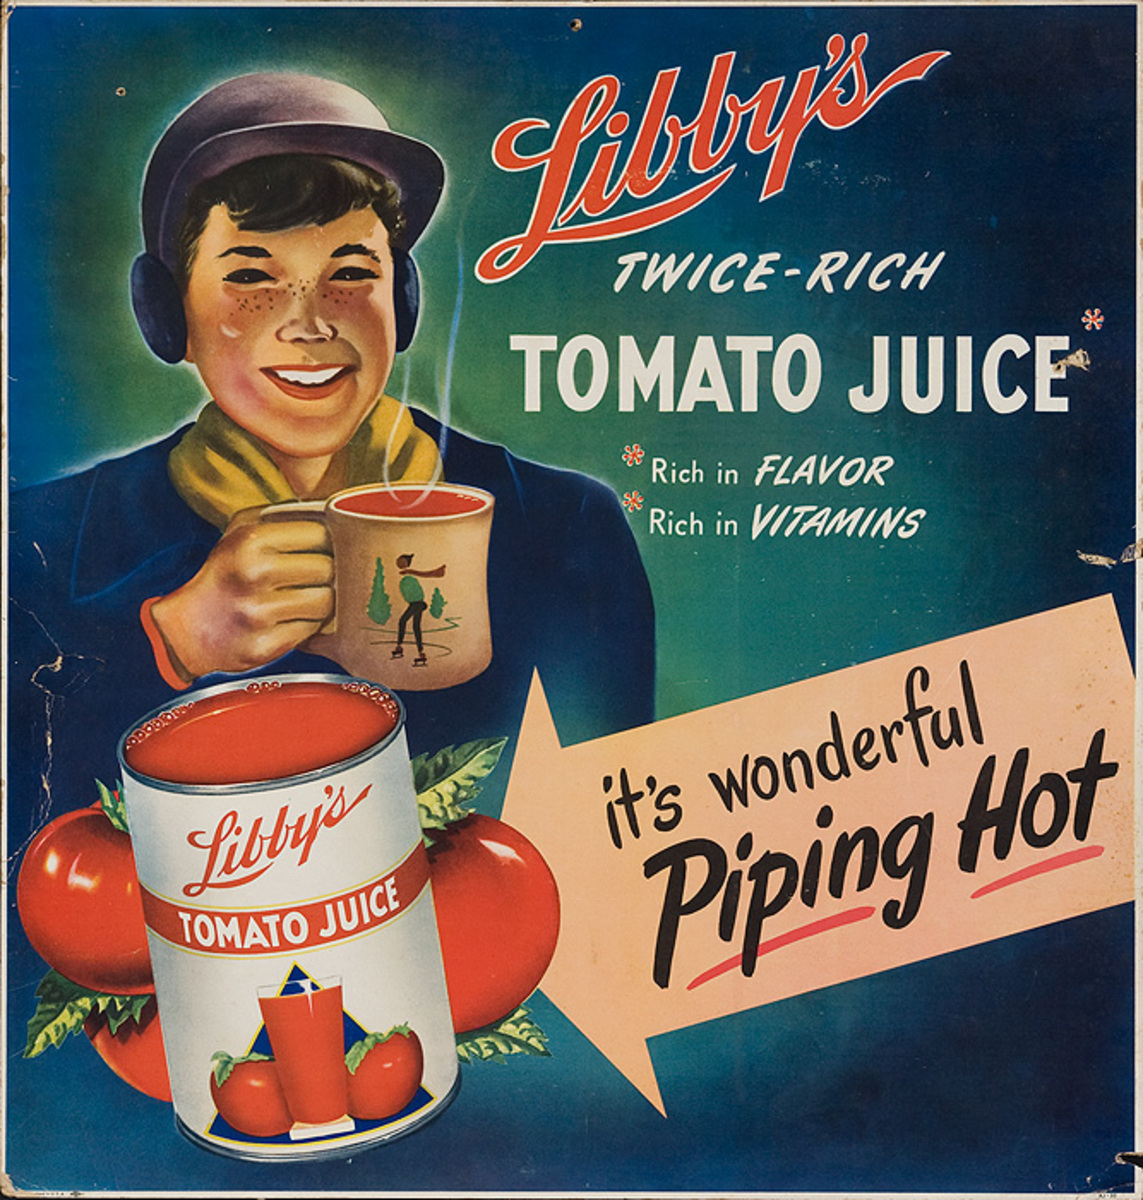 Original Libby's Tomato Juice Advertising Poster